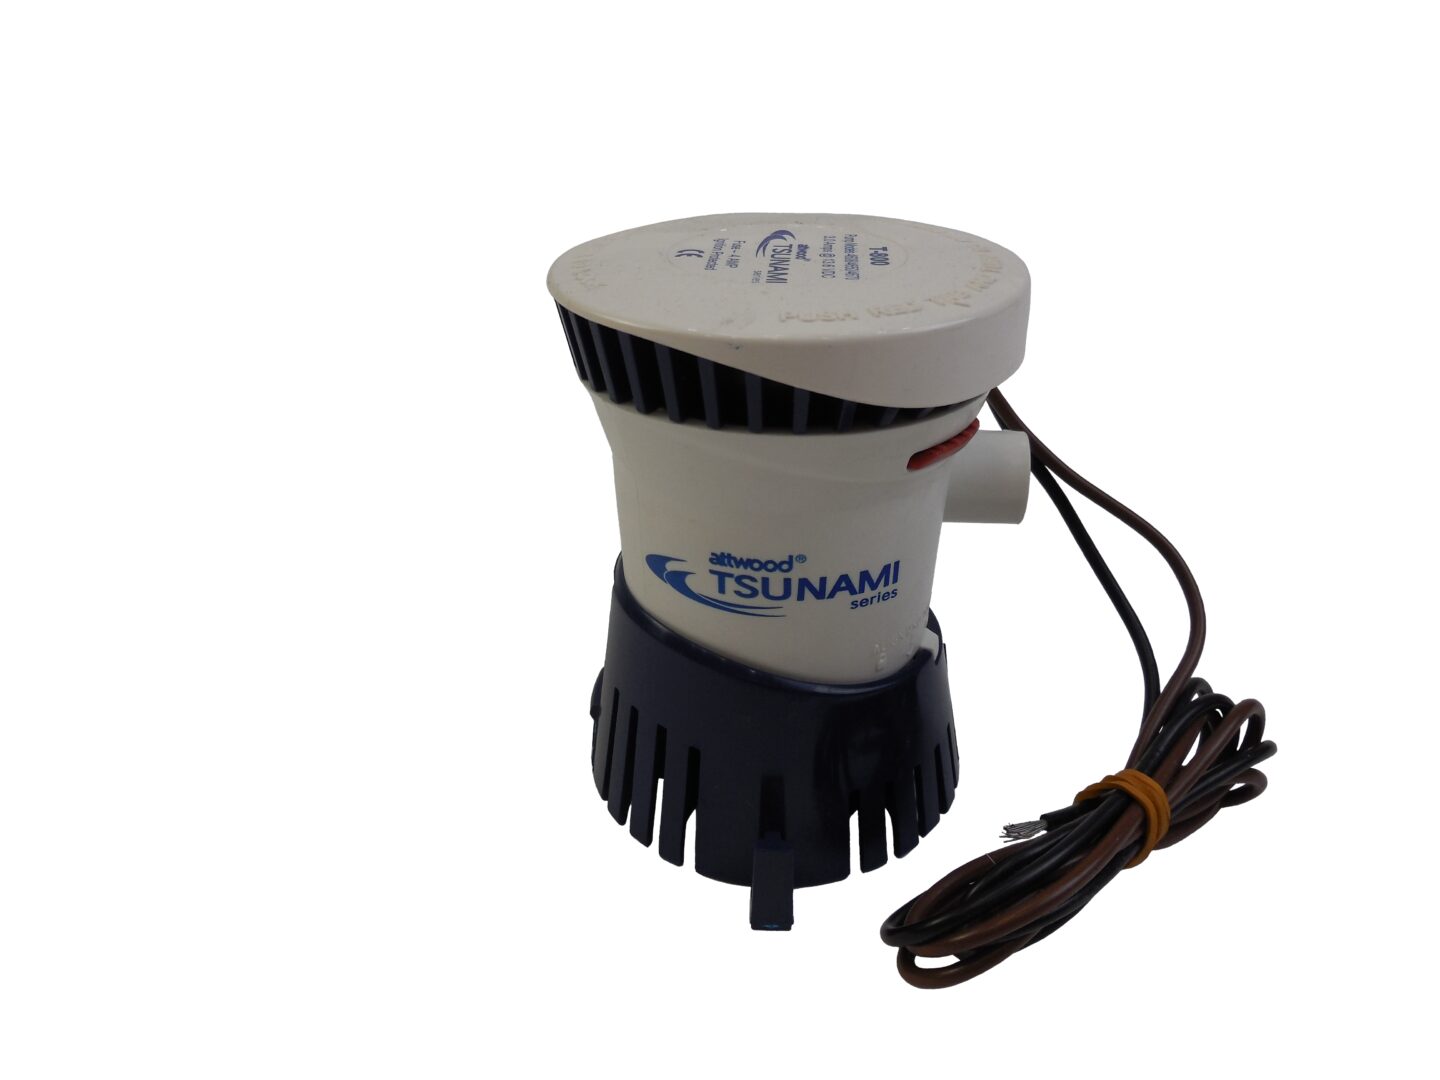 A Sump Pump Tsunami 800 GPH Bilge Pump 3amp with a cord attached to it.